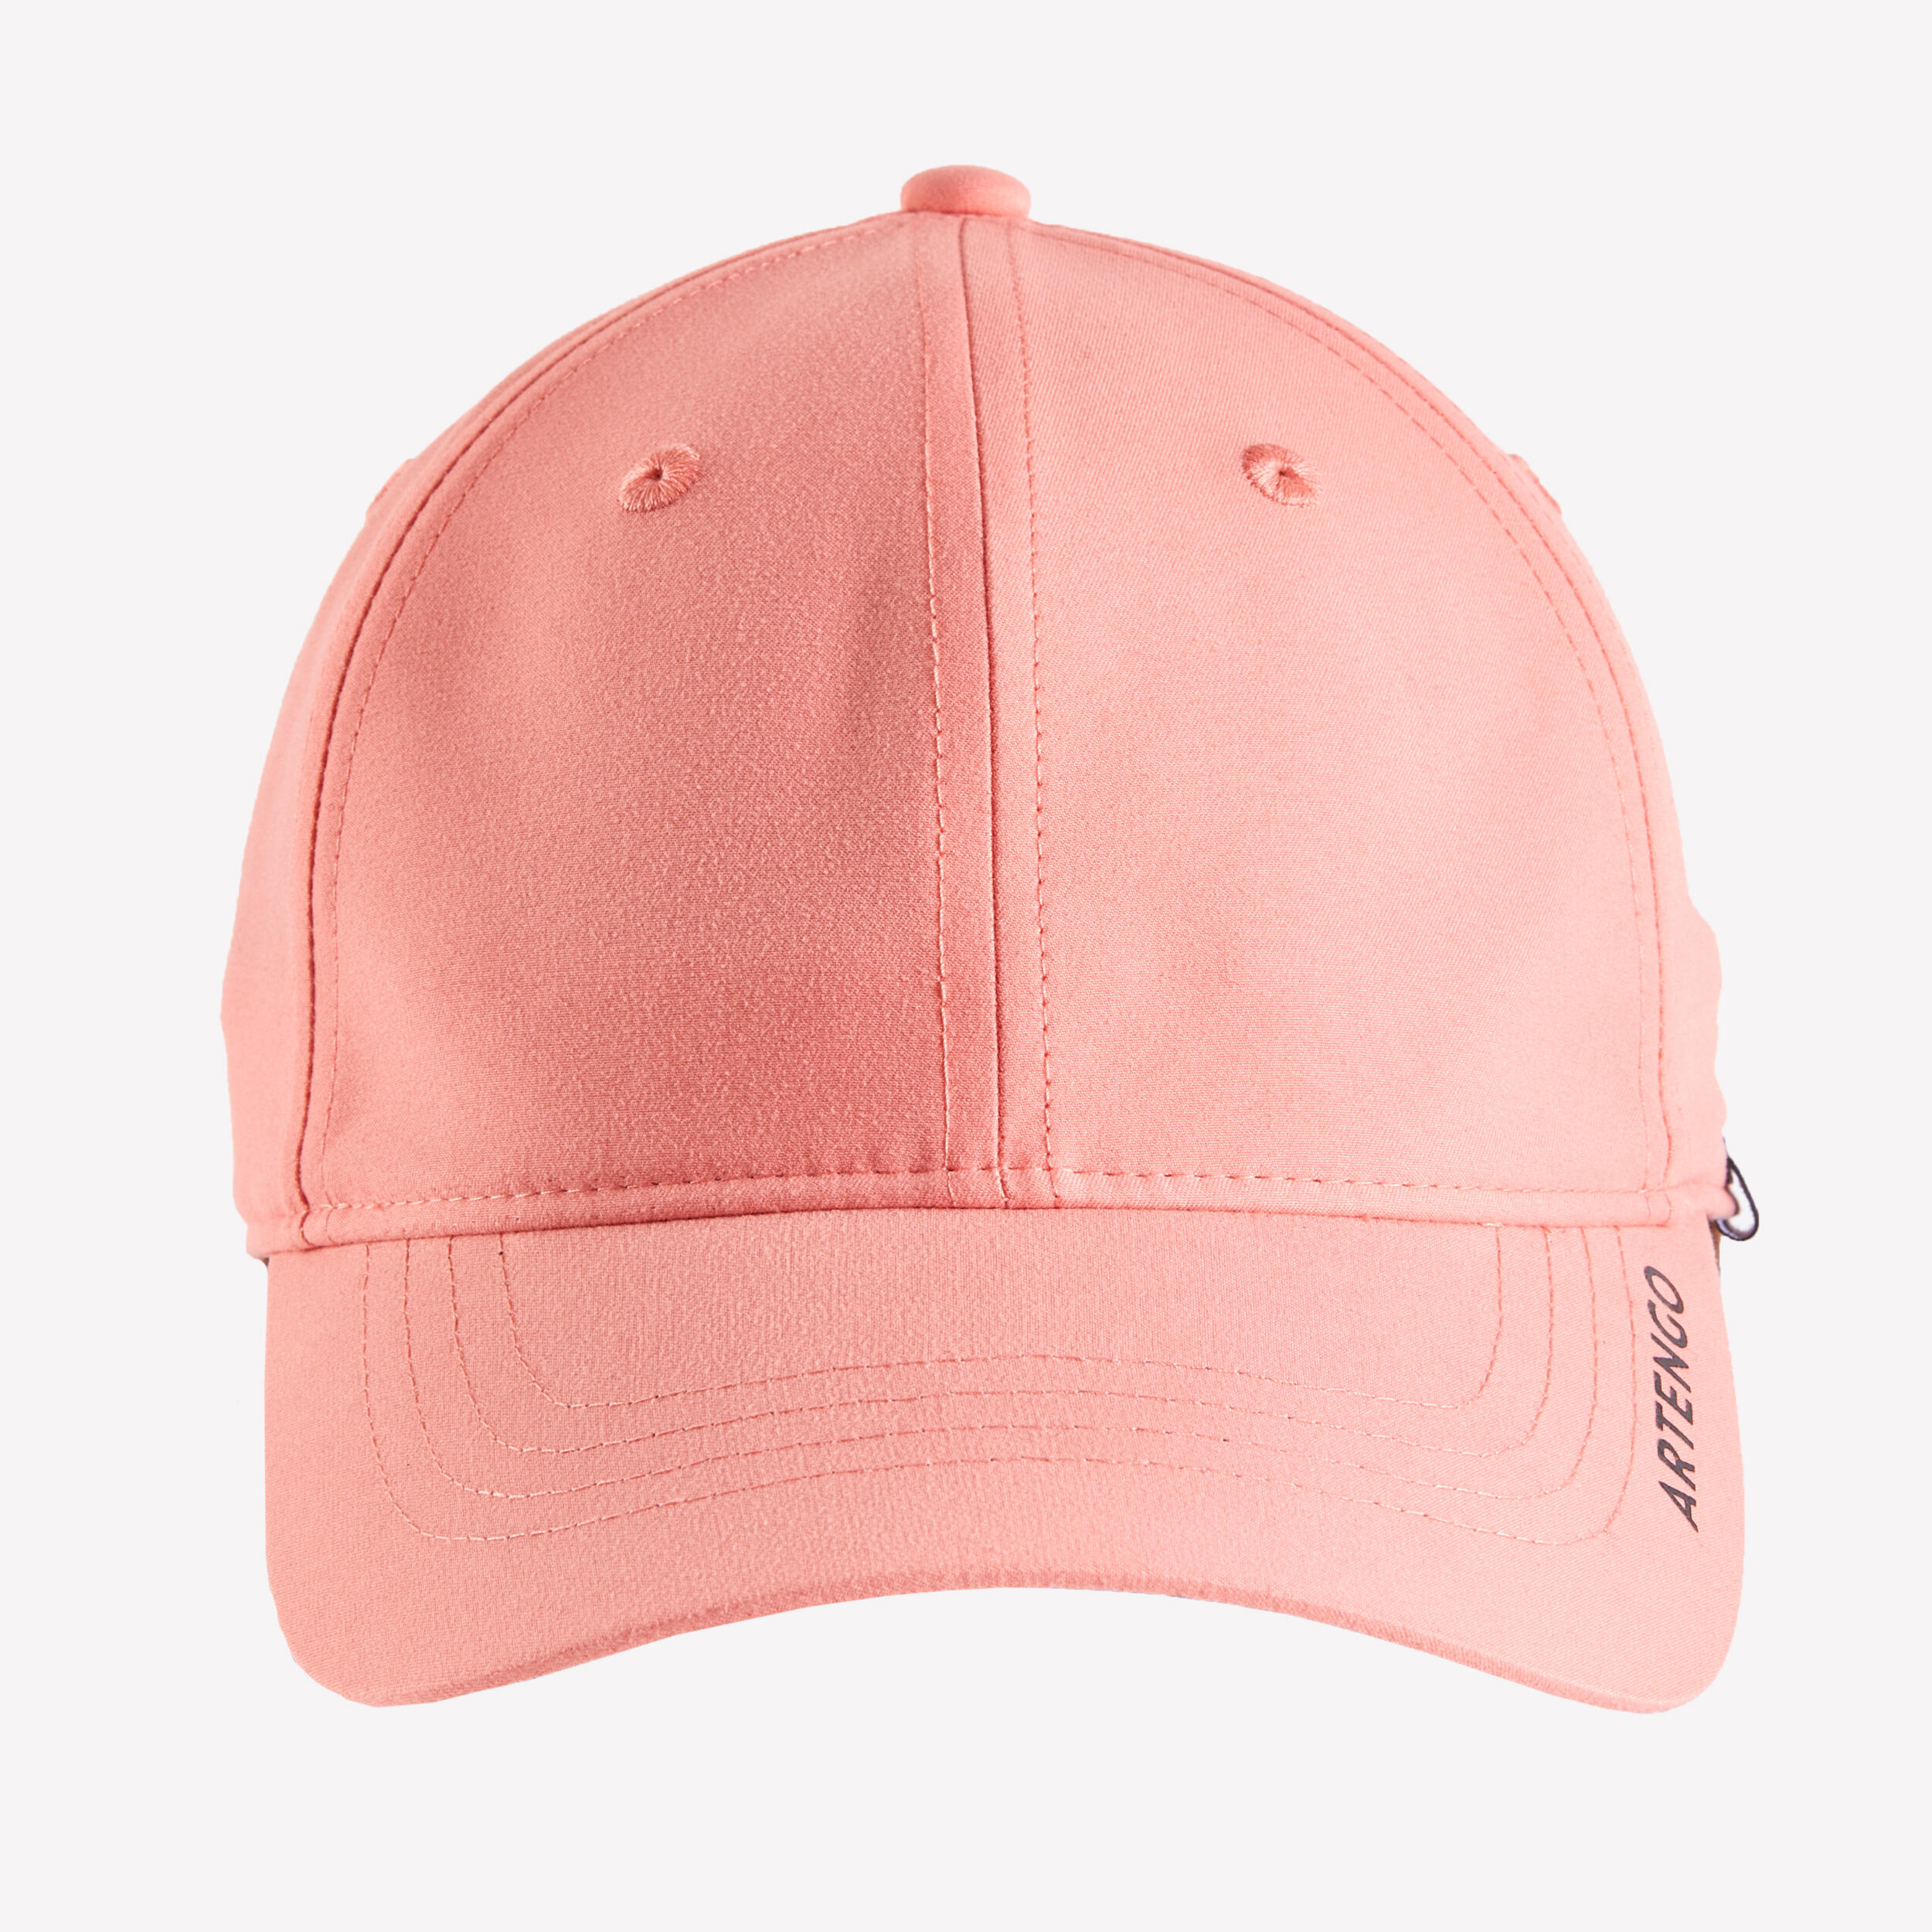 Tennis Cap Size 56 TC 500 - Pink/Black 3/4